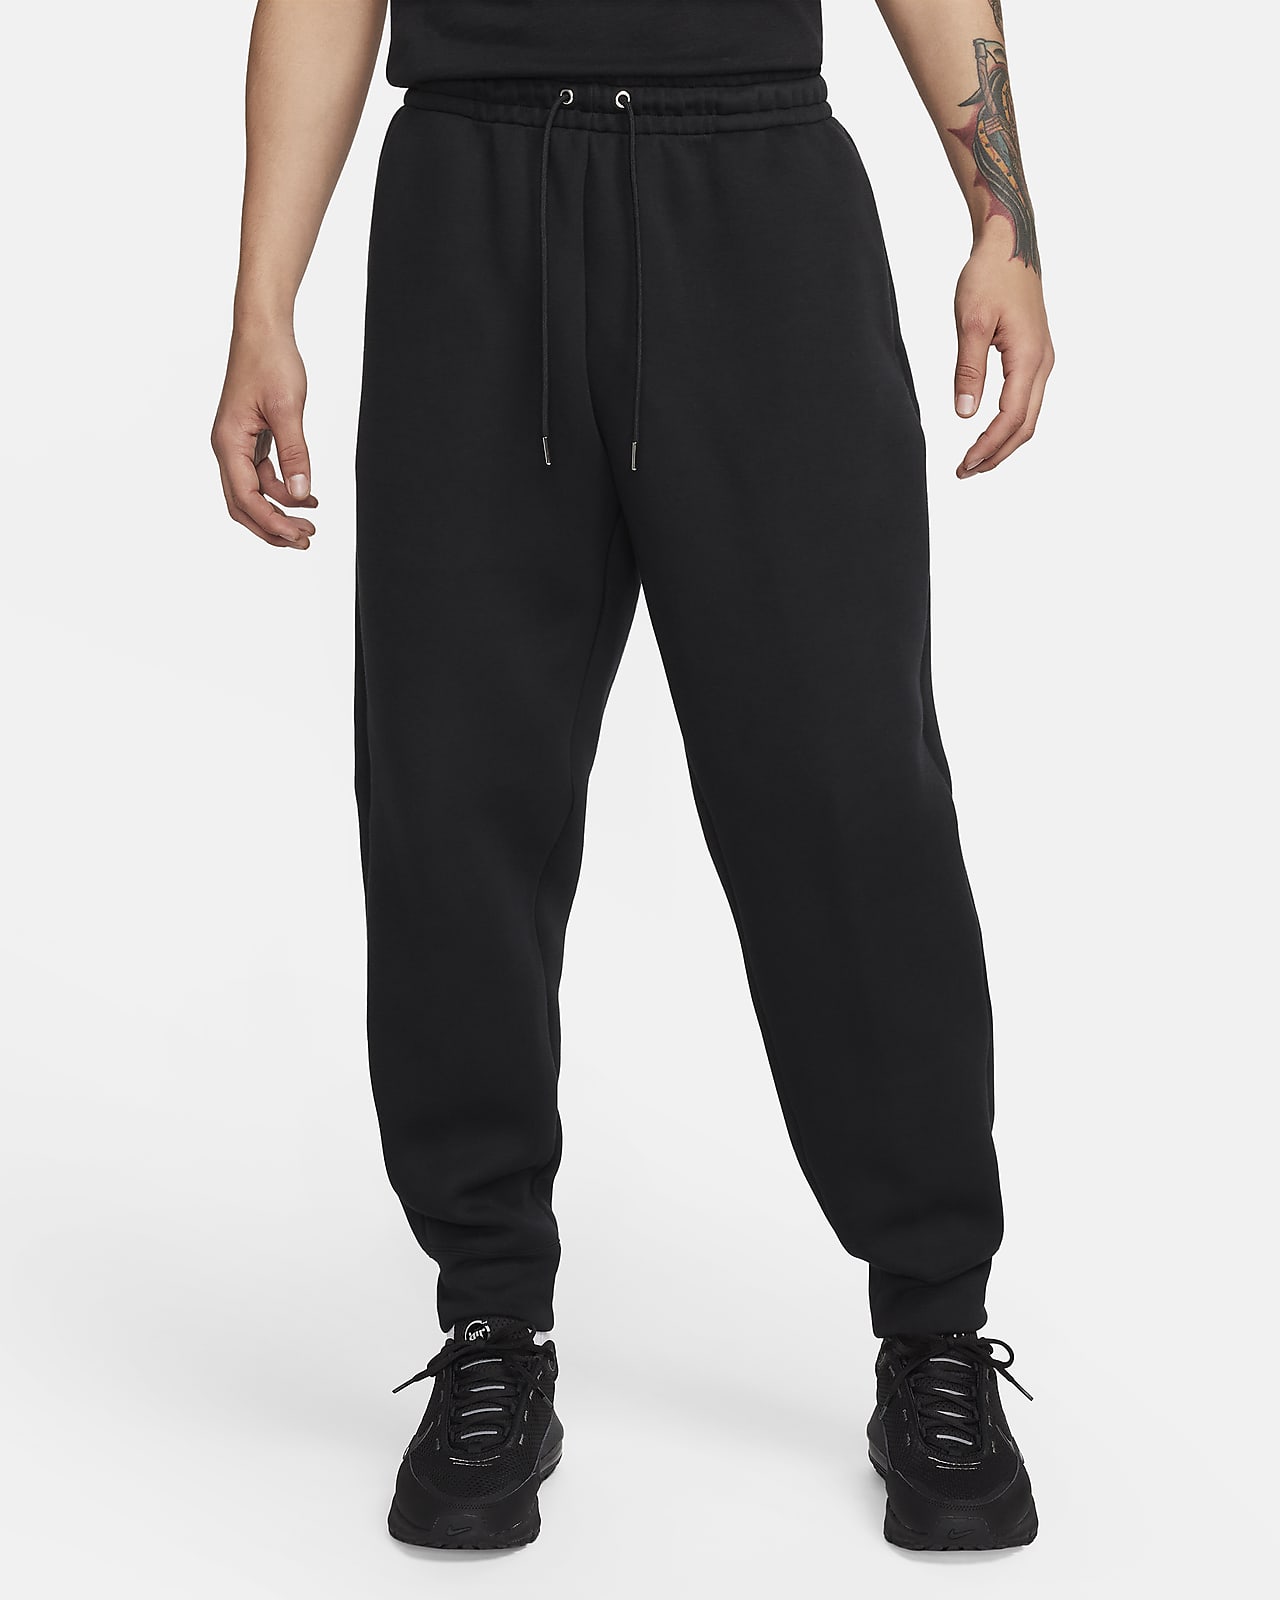 Nike Tech Fleece Joggers Trousers Size L, XL Grey